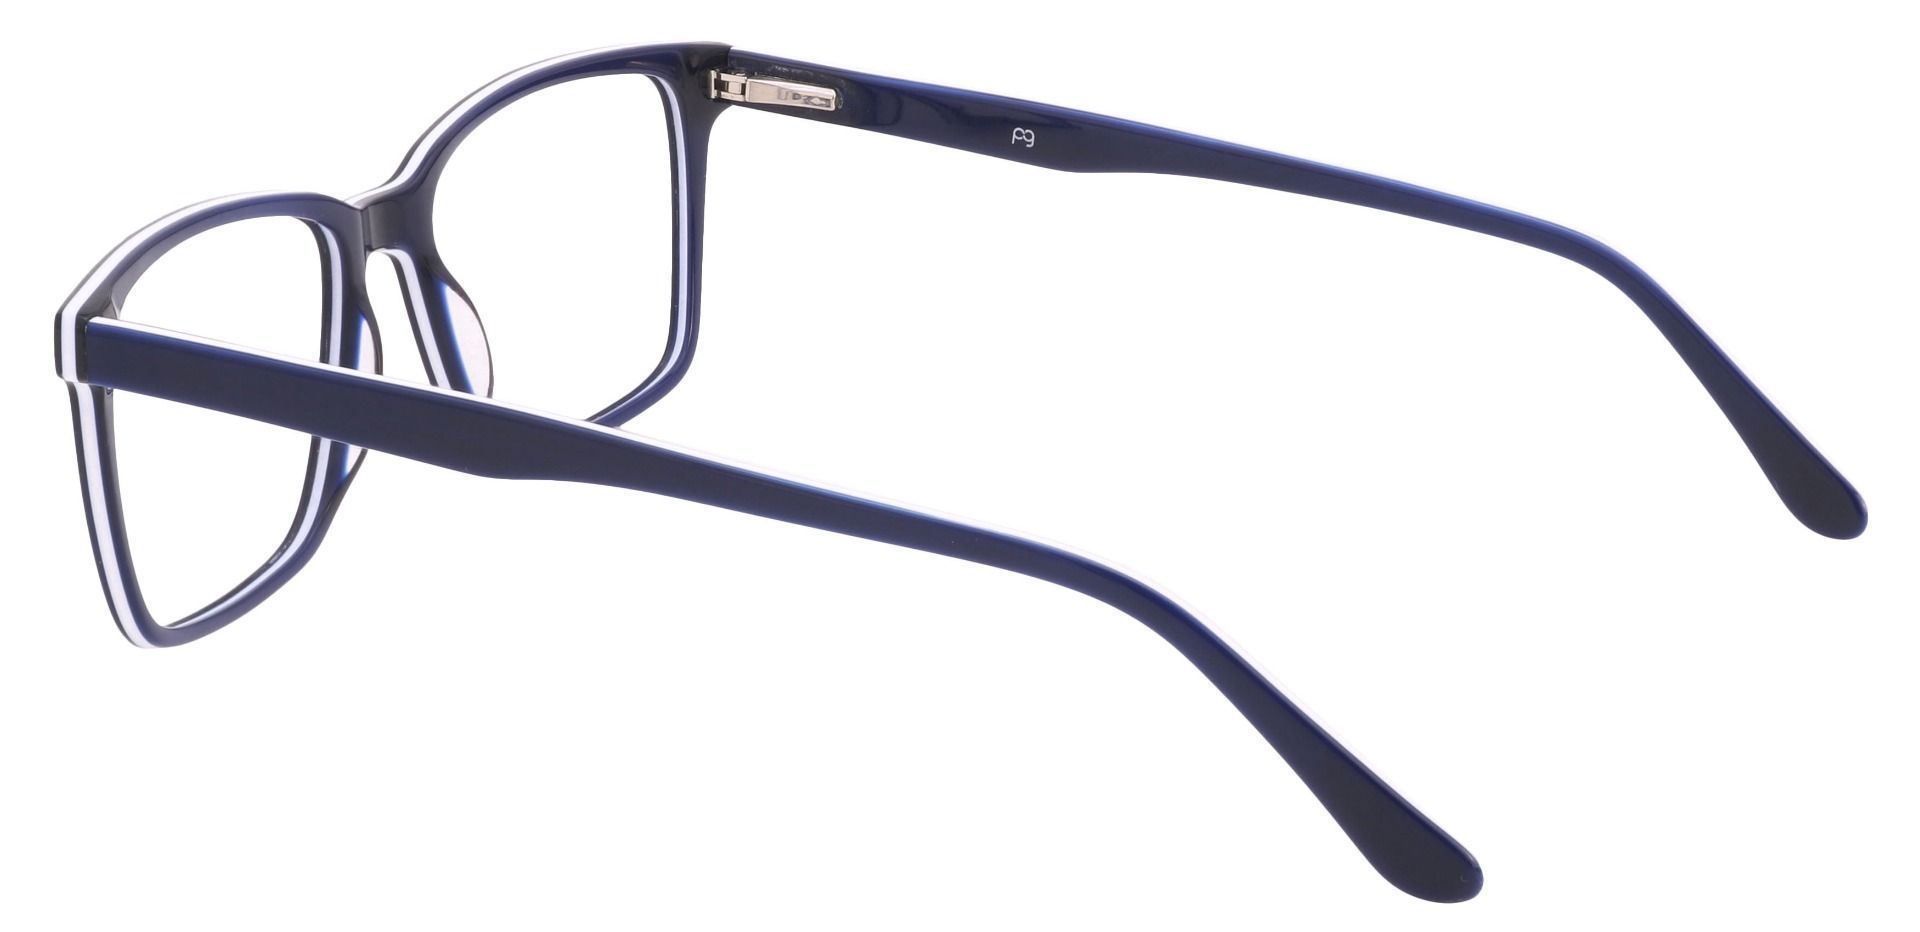 Venice Rectangle Lined Bifocal Glasses - Navy-white